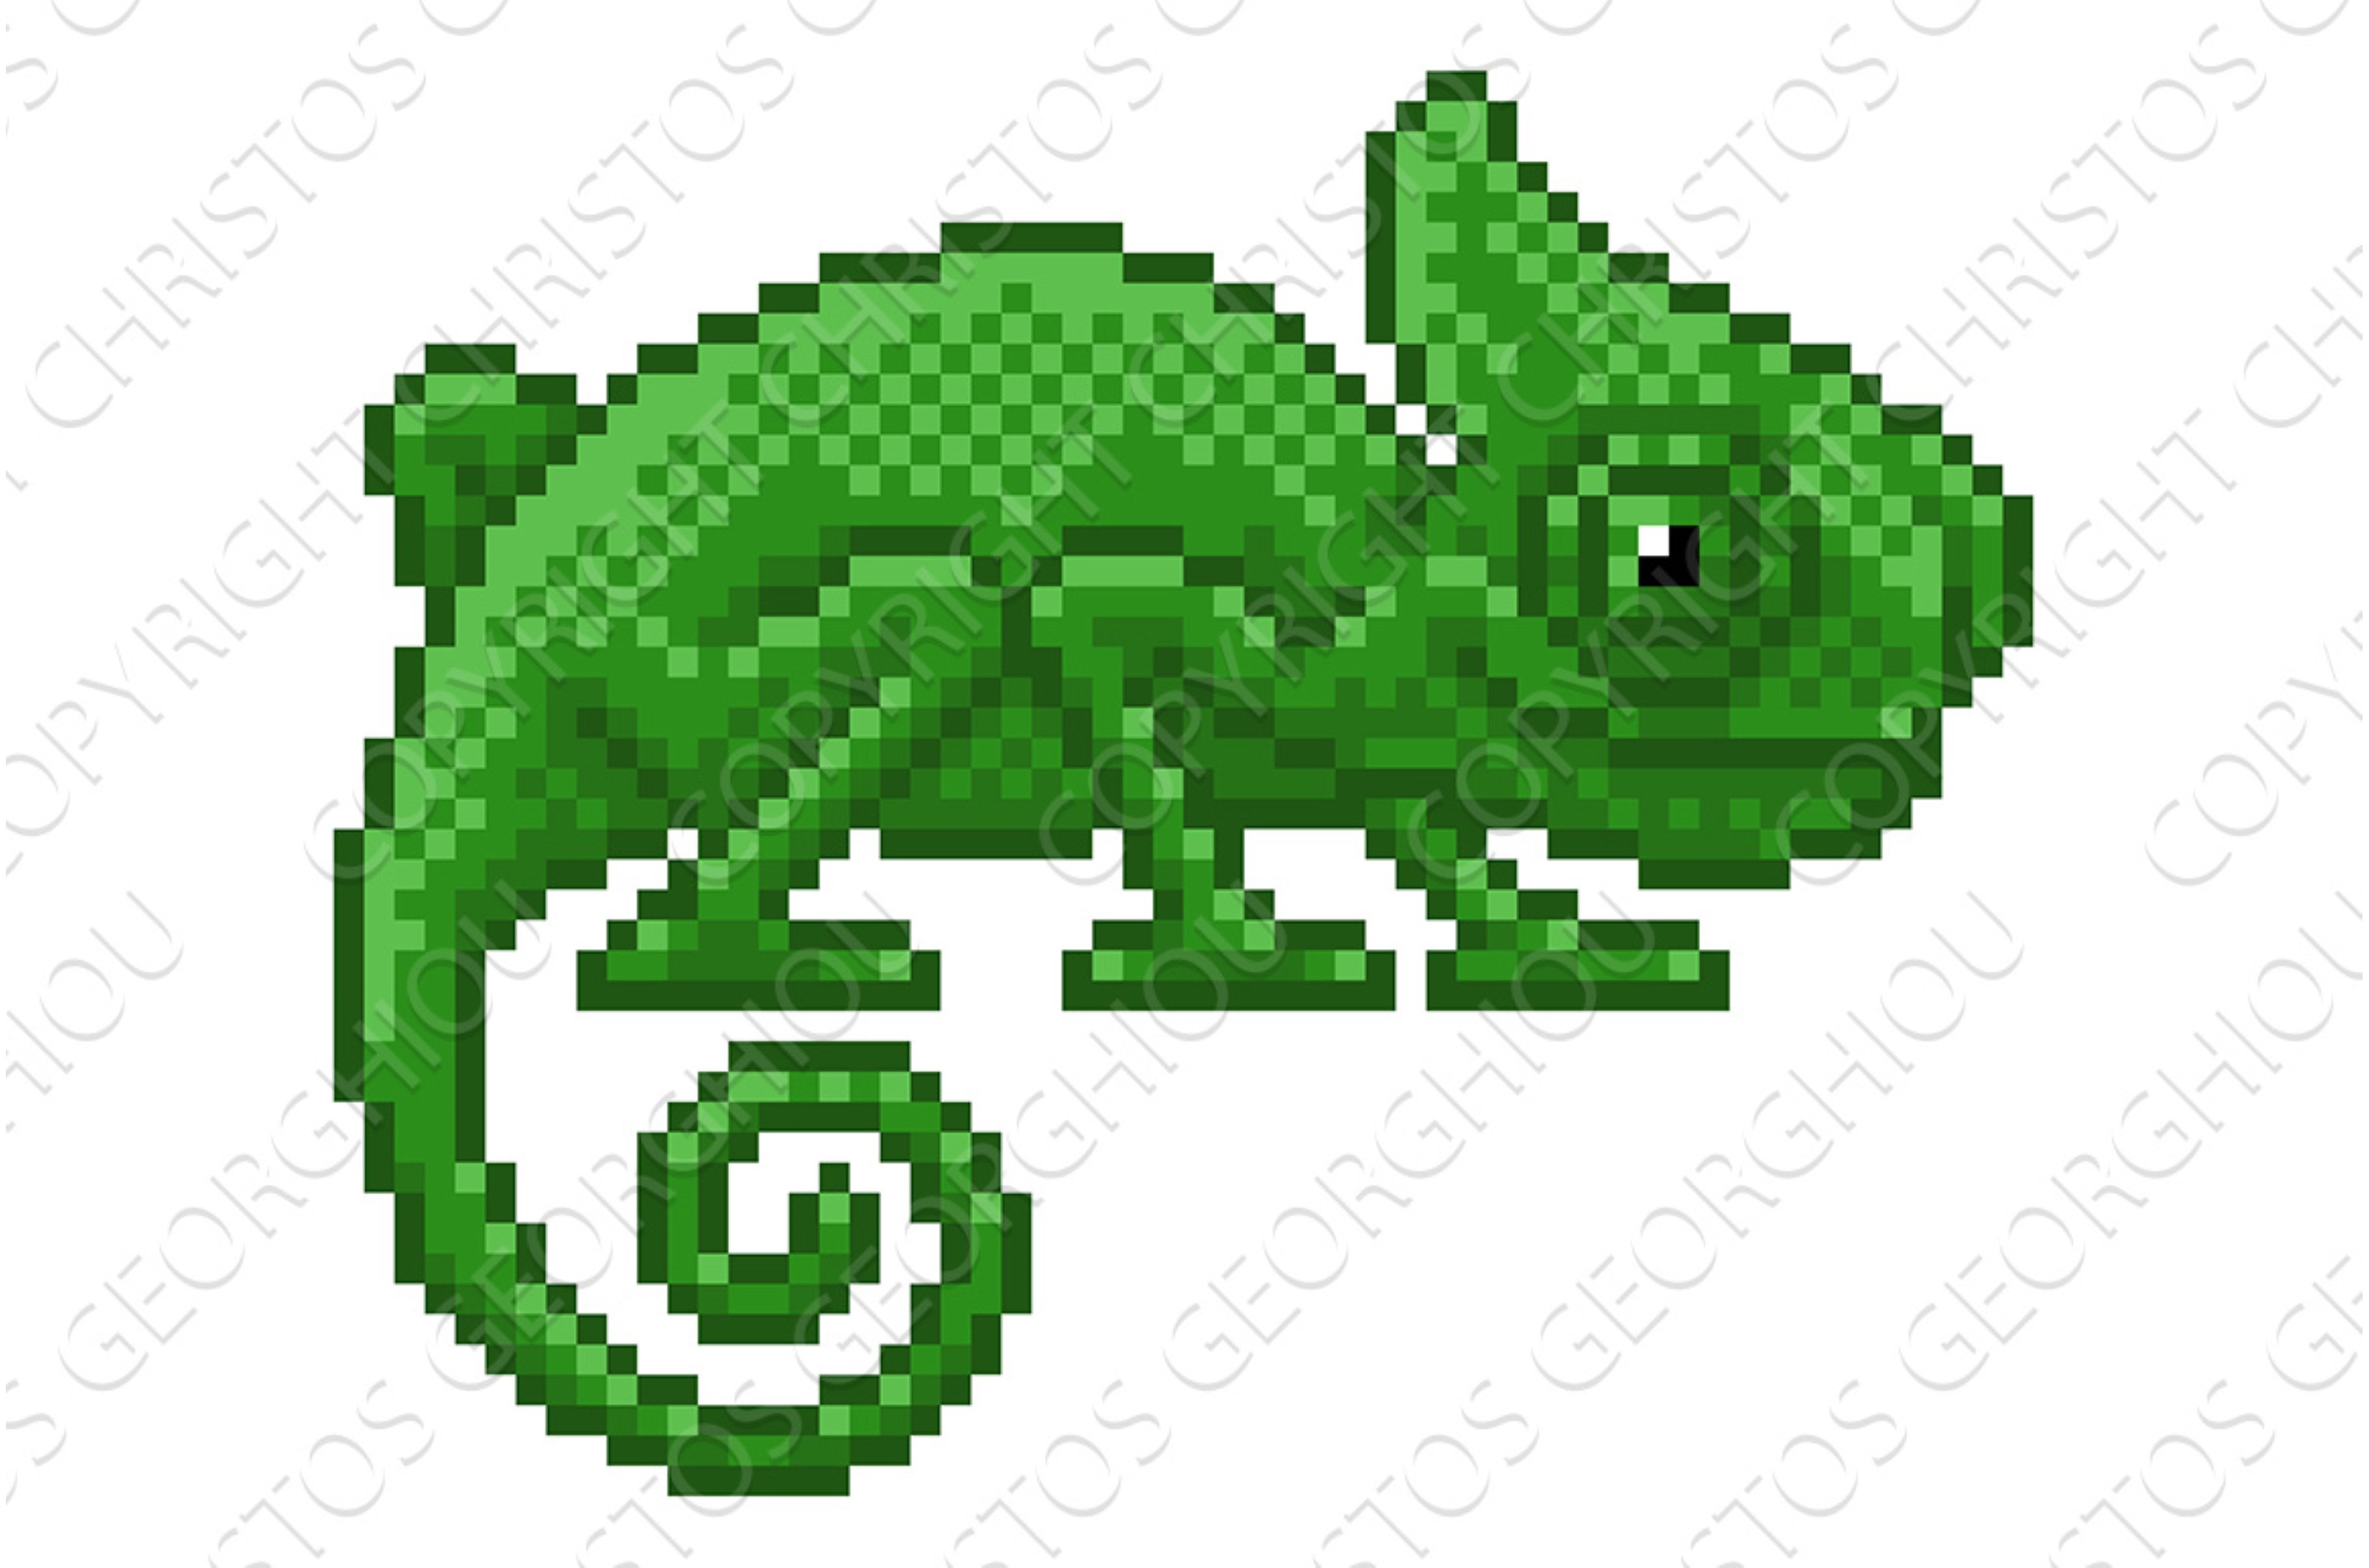 Chameleon Lizard Pixel Art Video cover image.